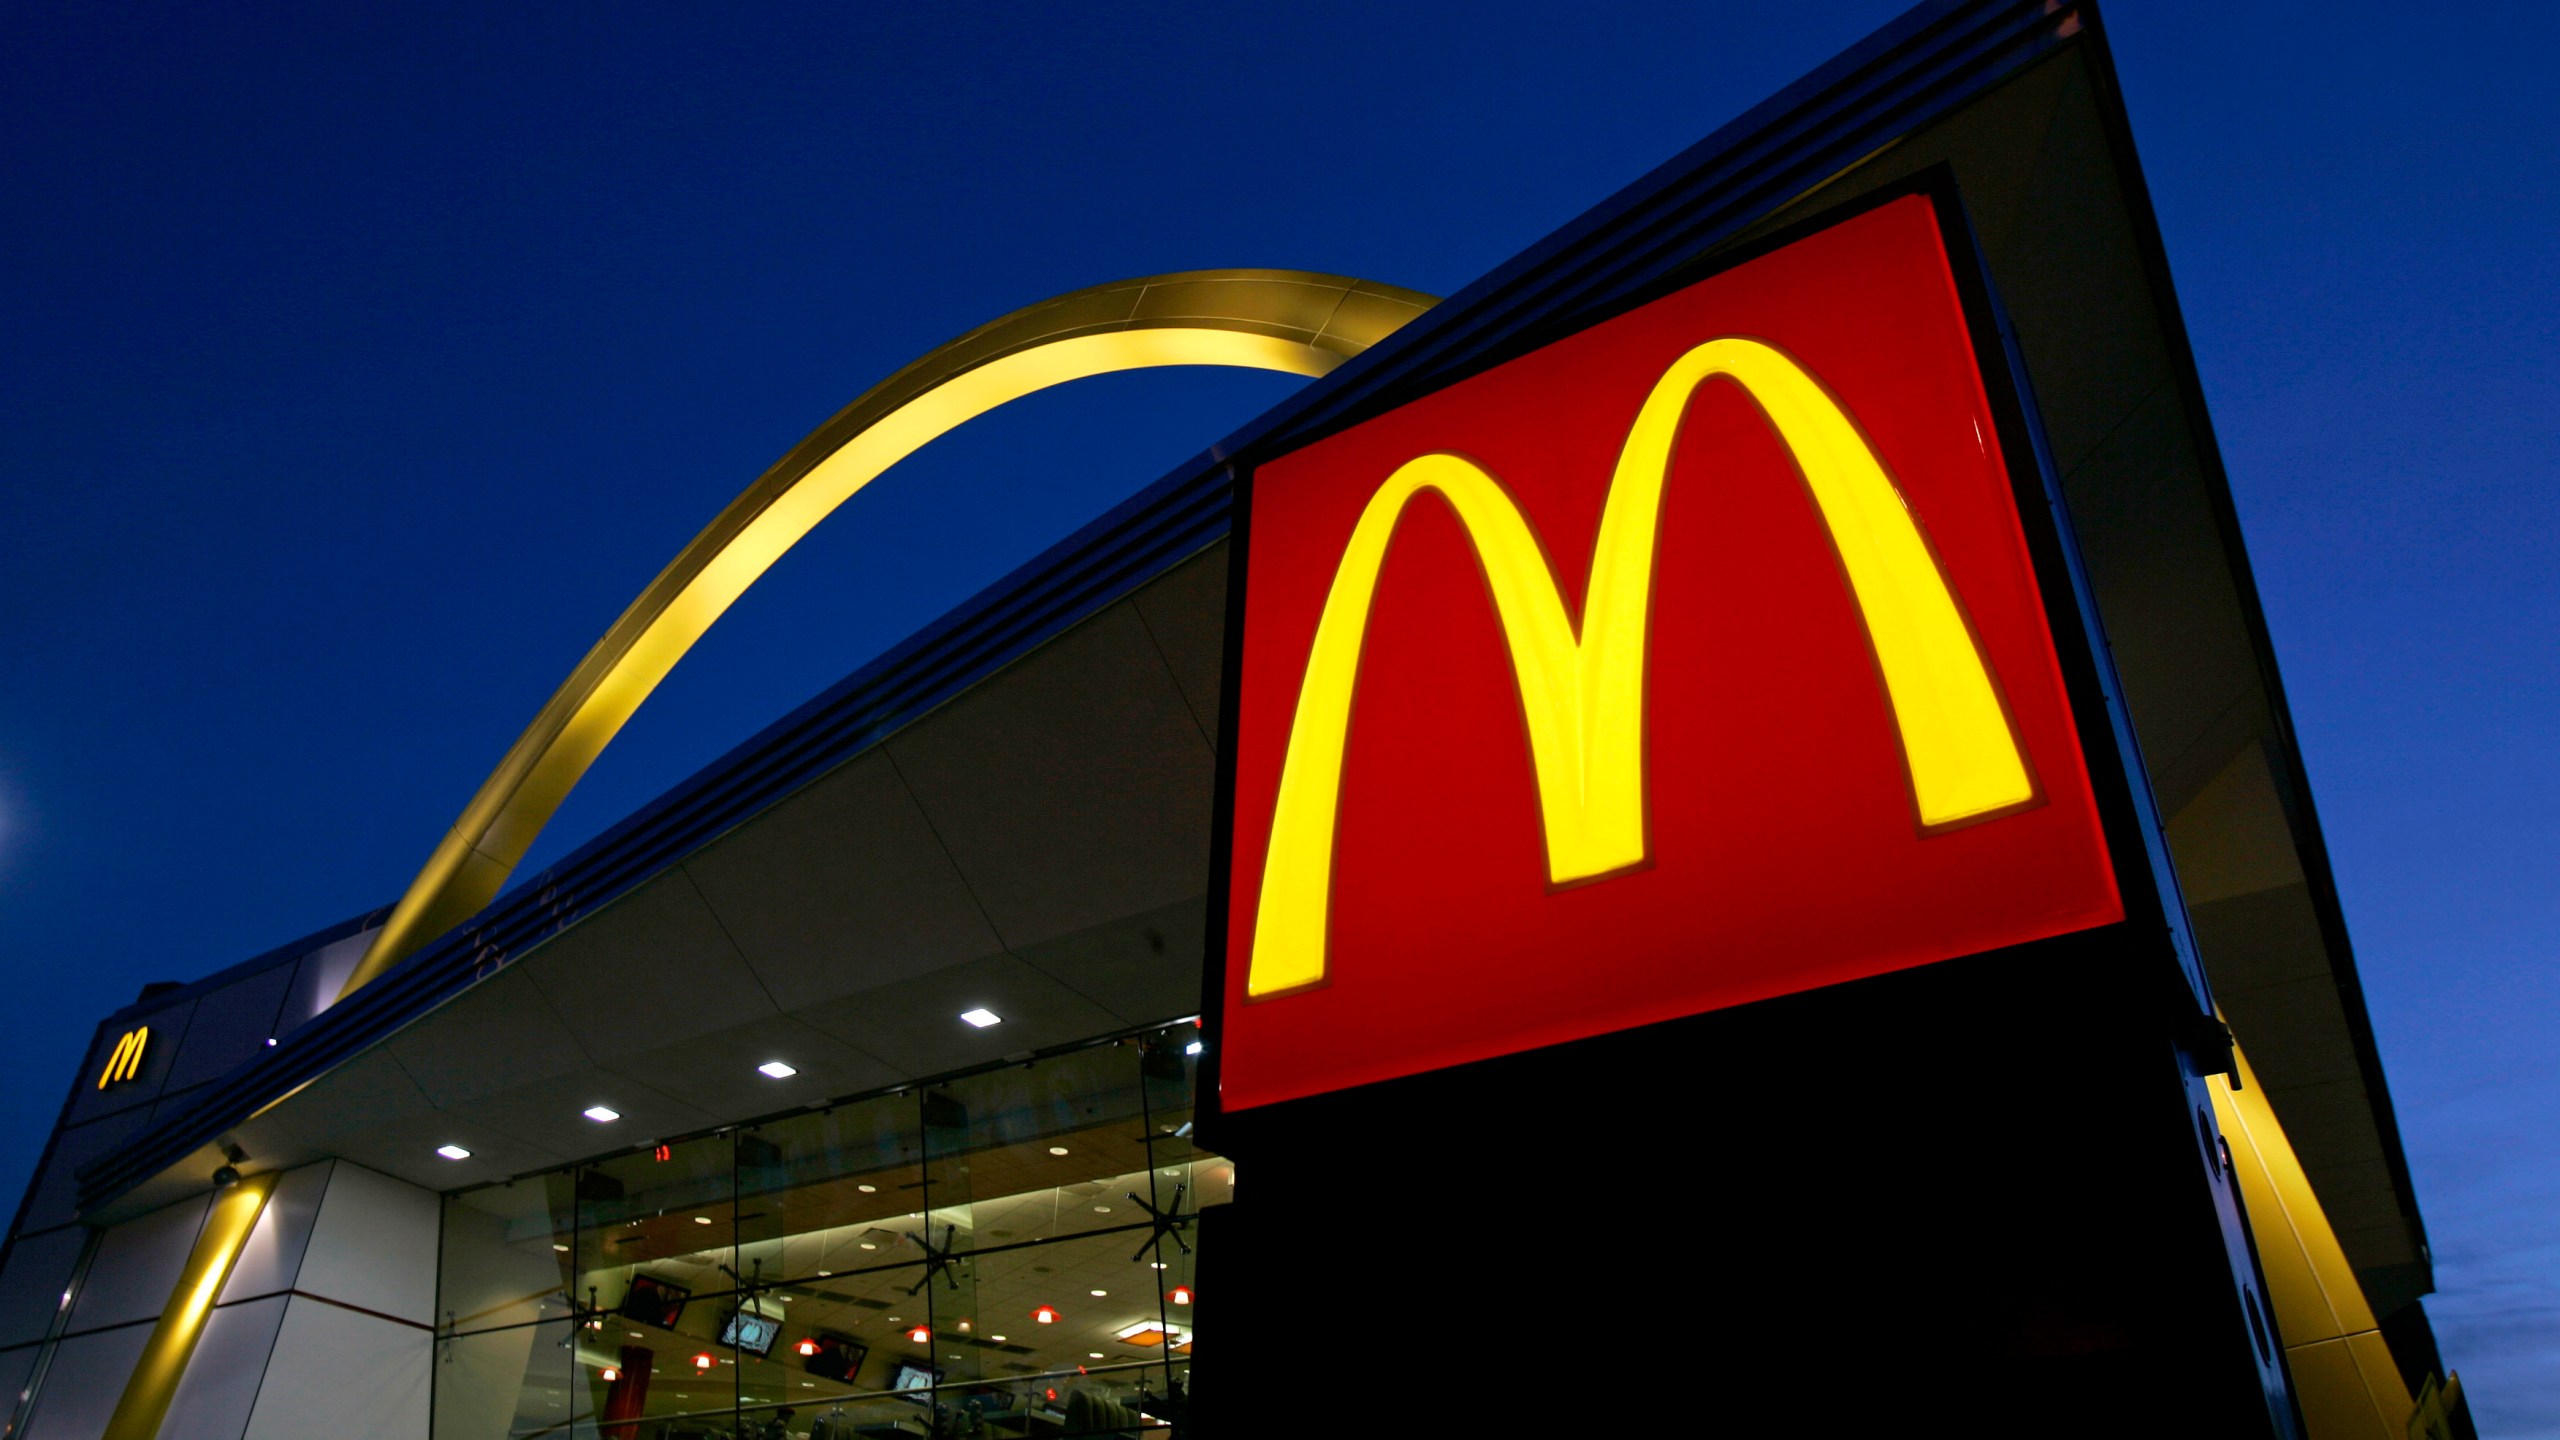 The McDonald's restaurant logo and golden arch.